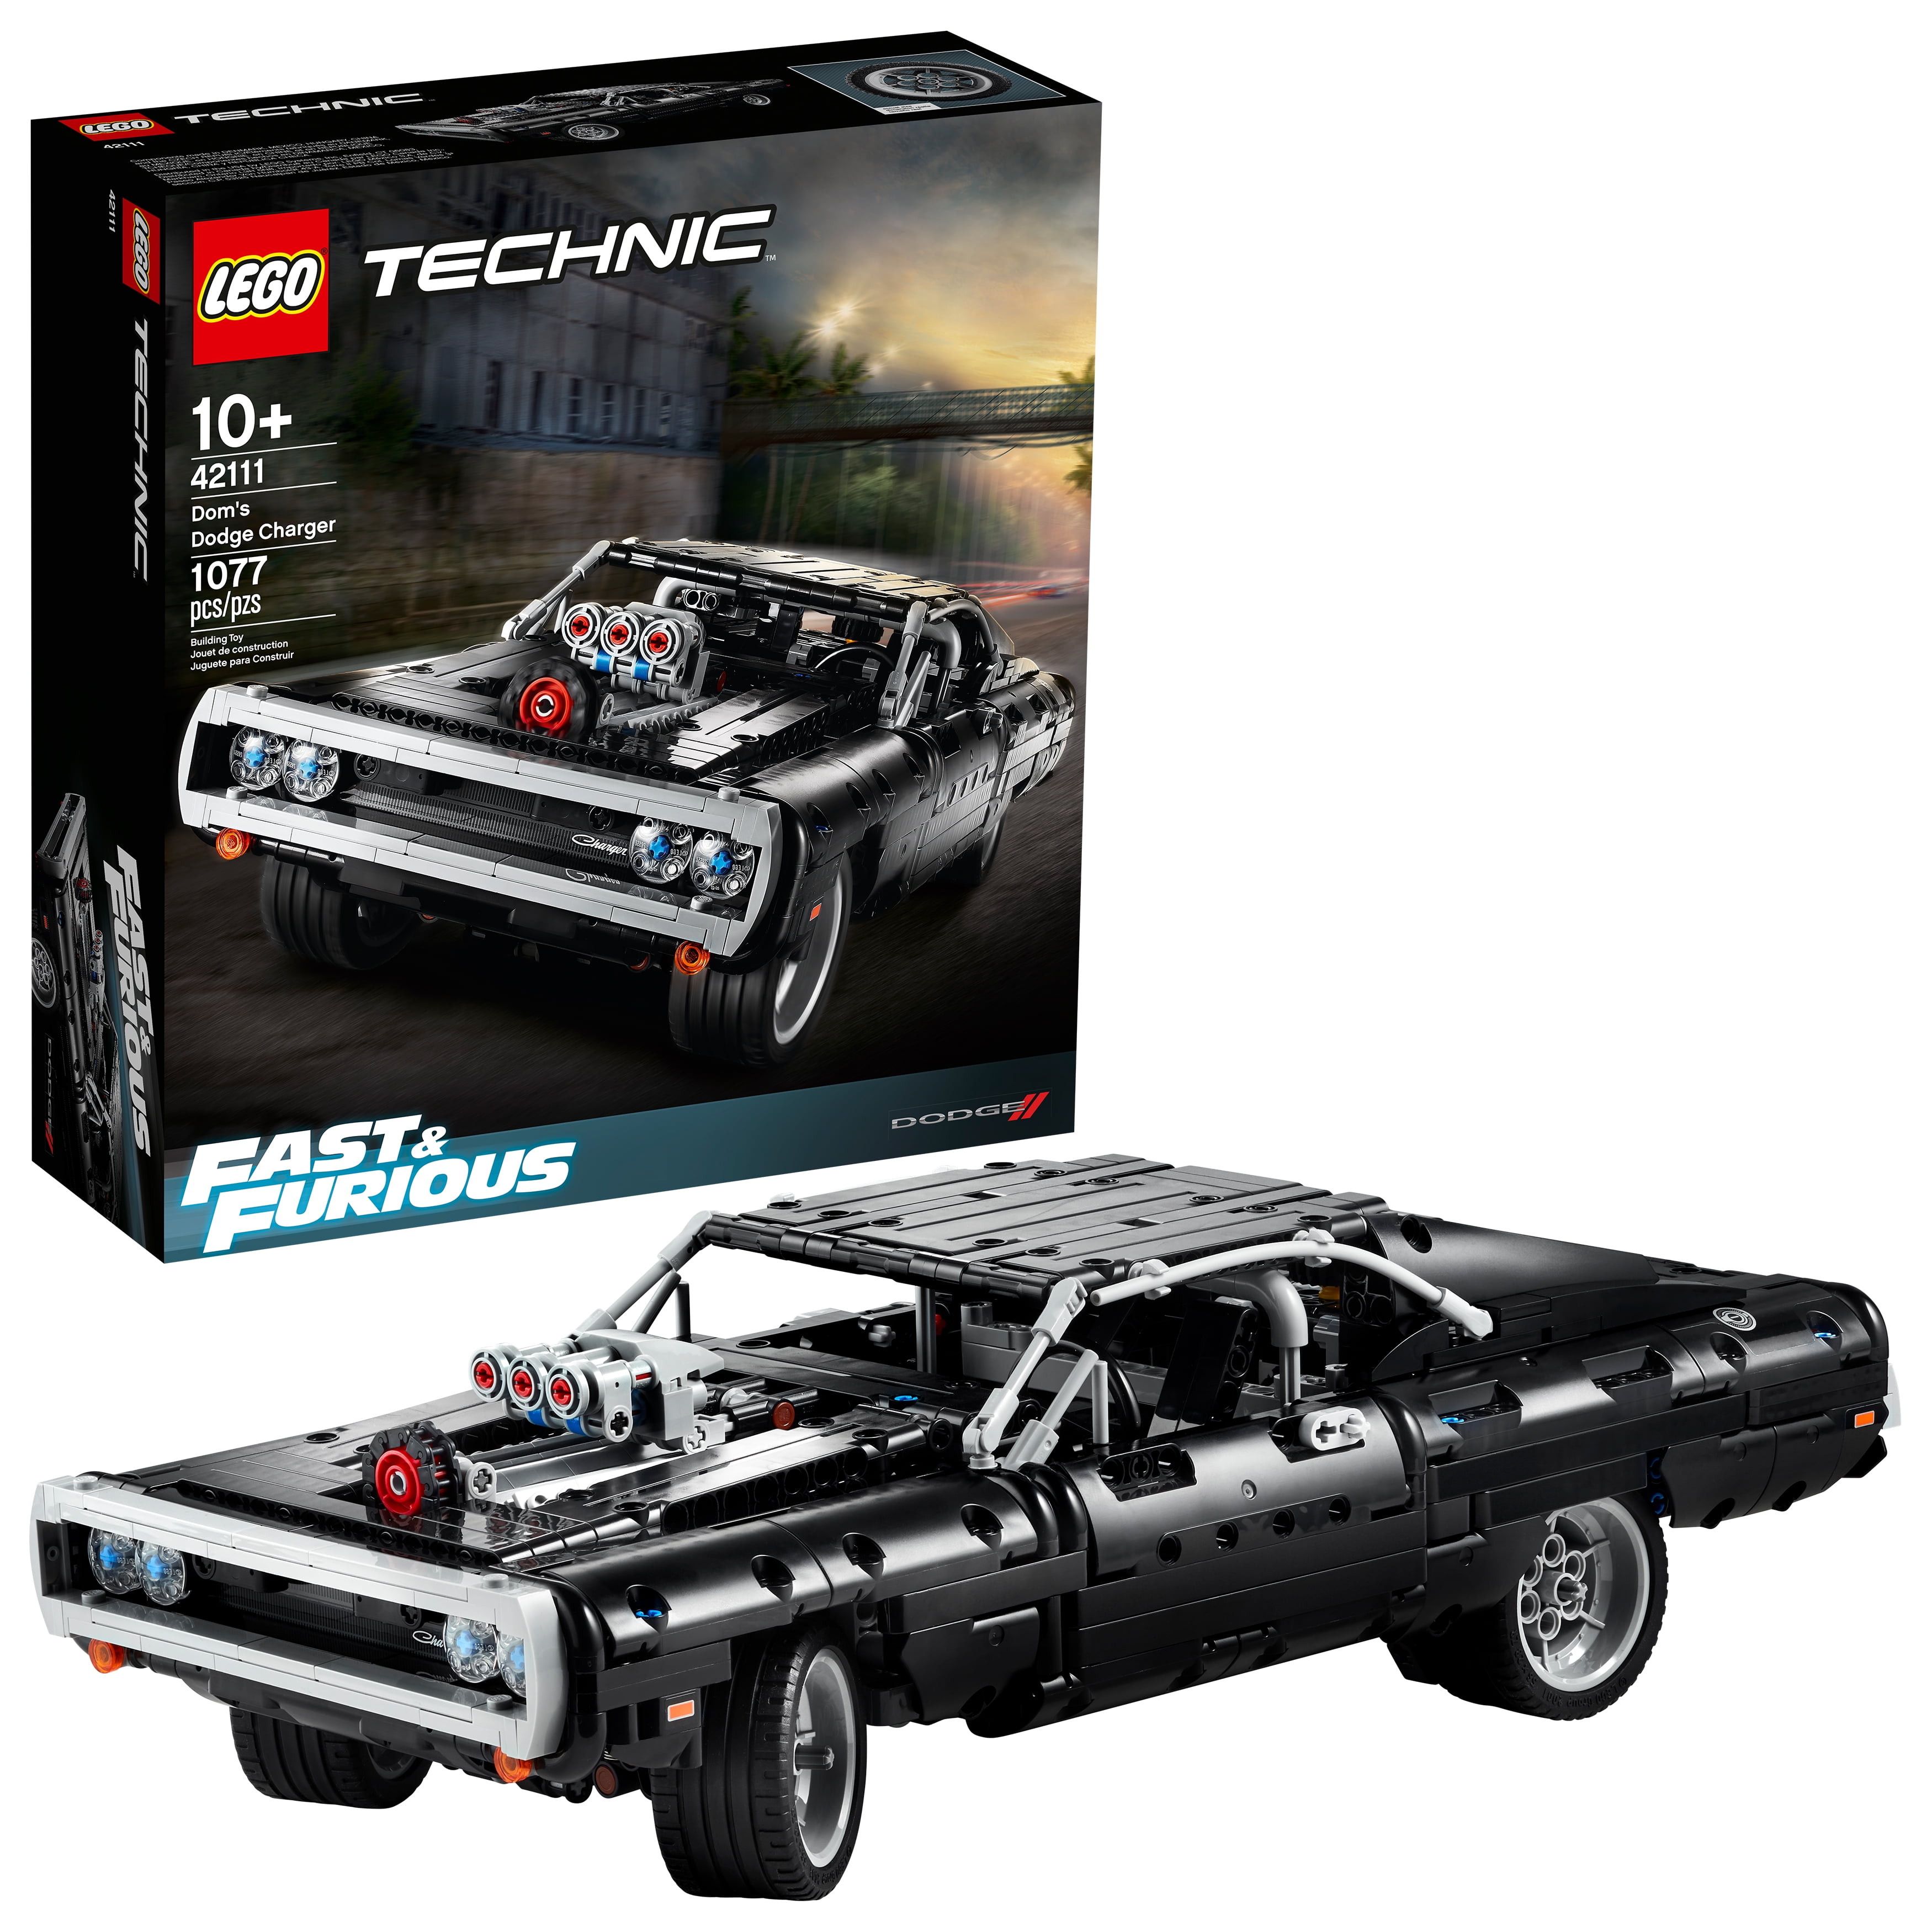 LEGO Technic Fast & Furious Dom's Dodge Charger Race Car Building Set 42111